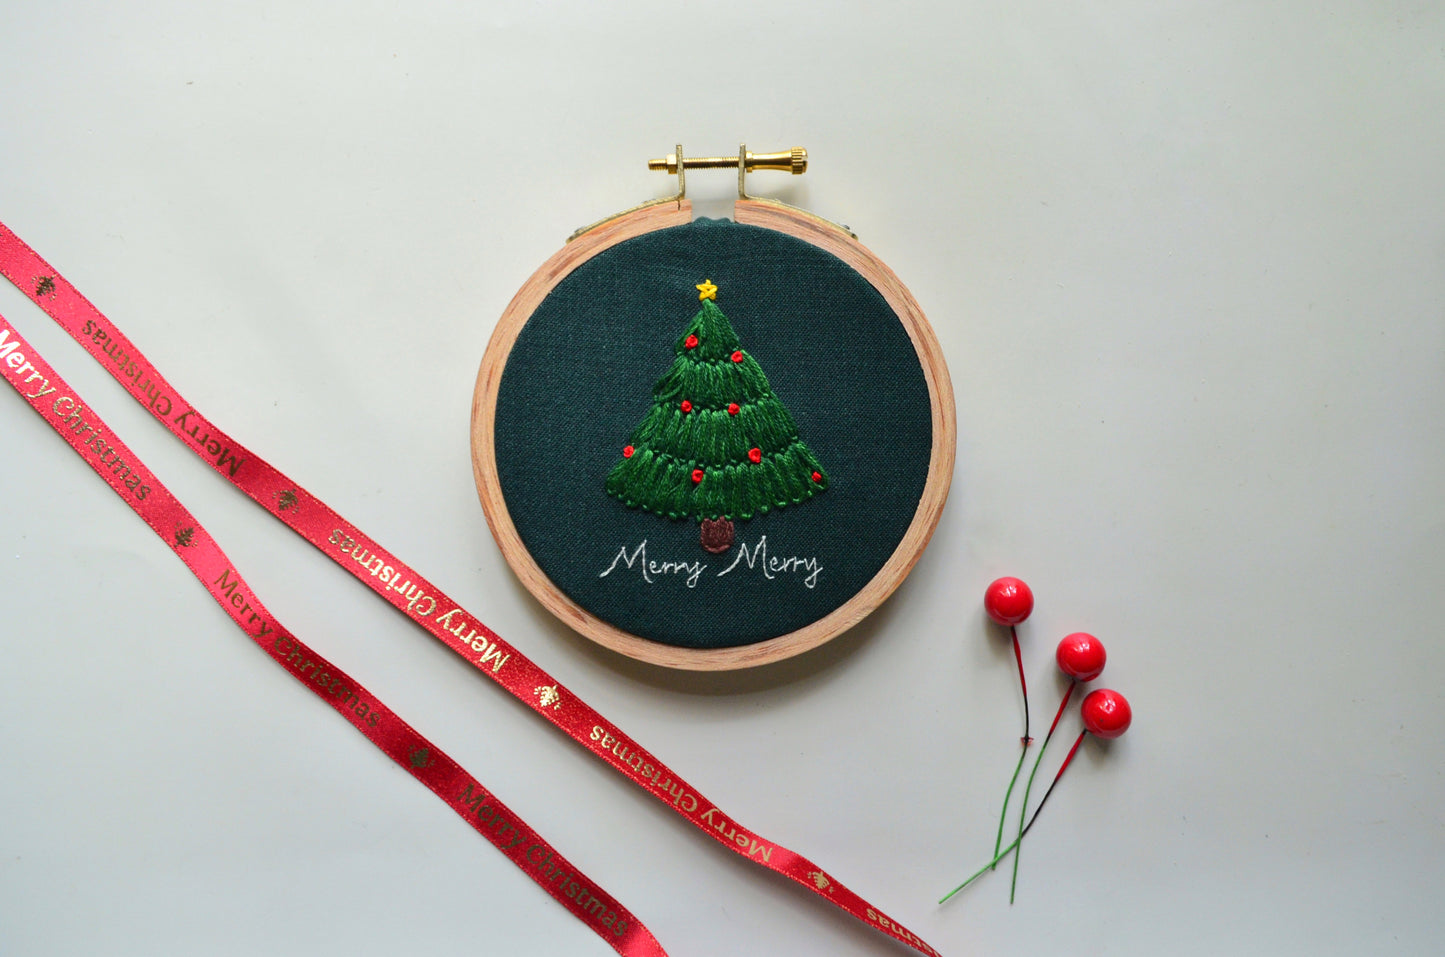 Merry Merry - 4” Christmas Tree Ornament